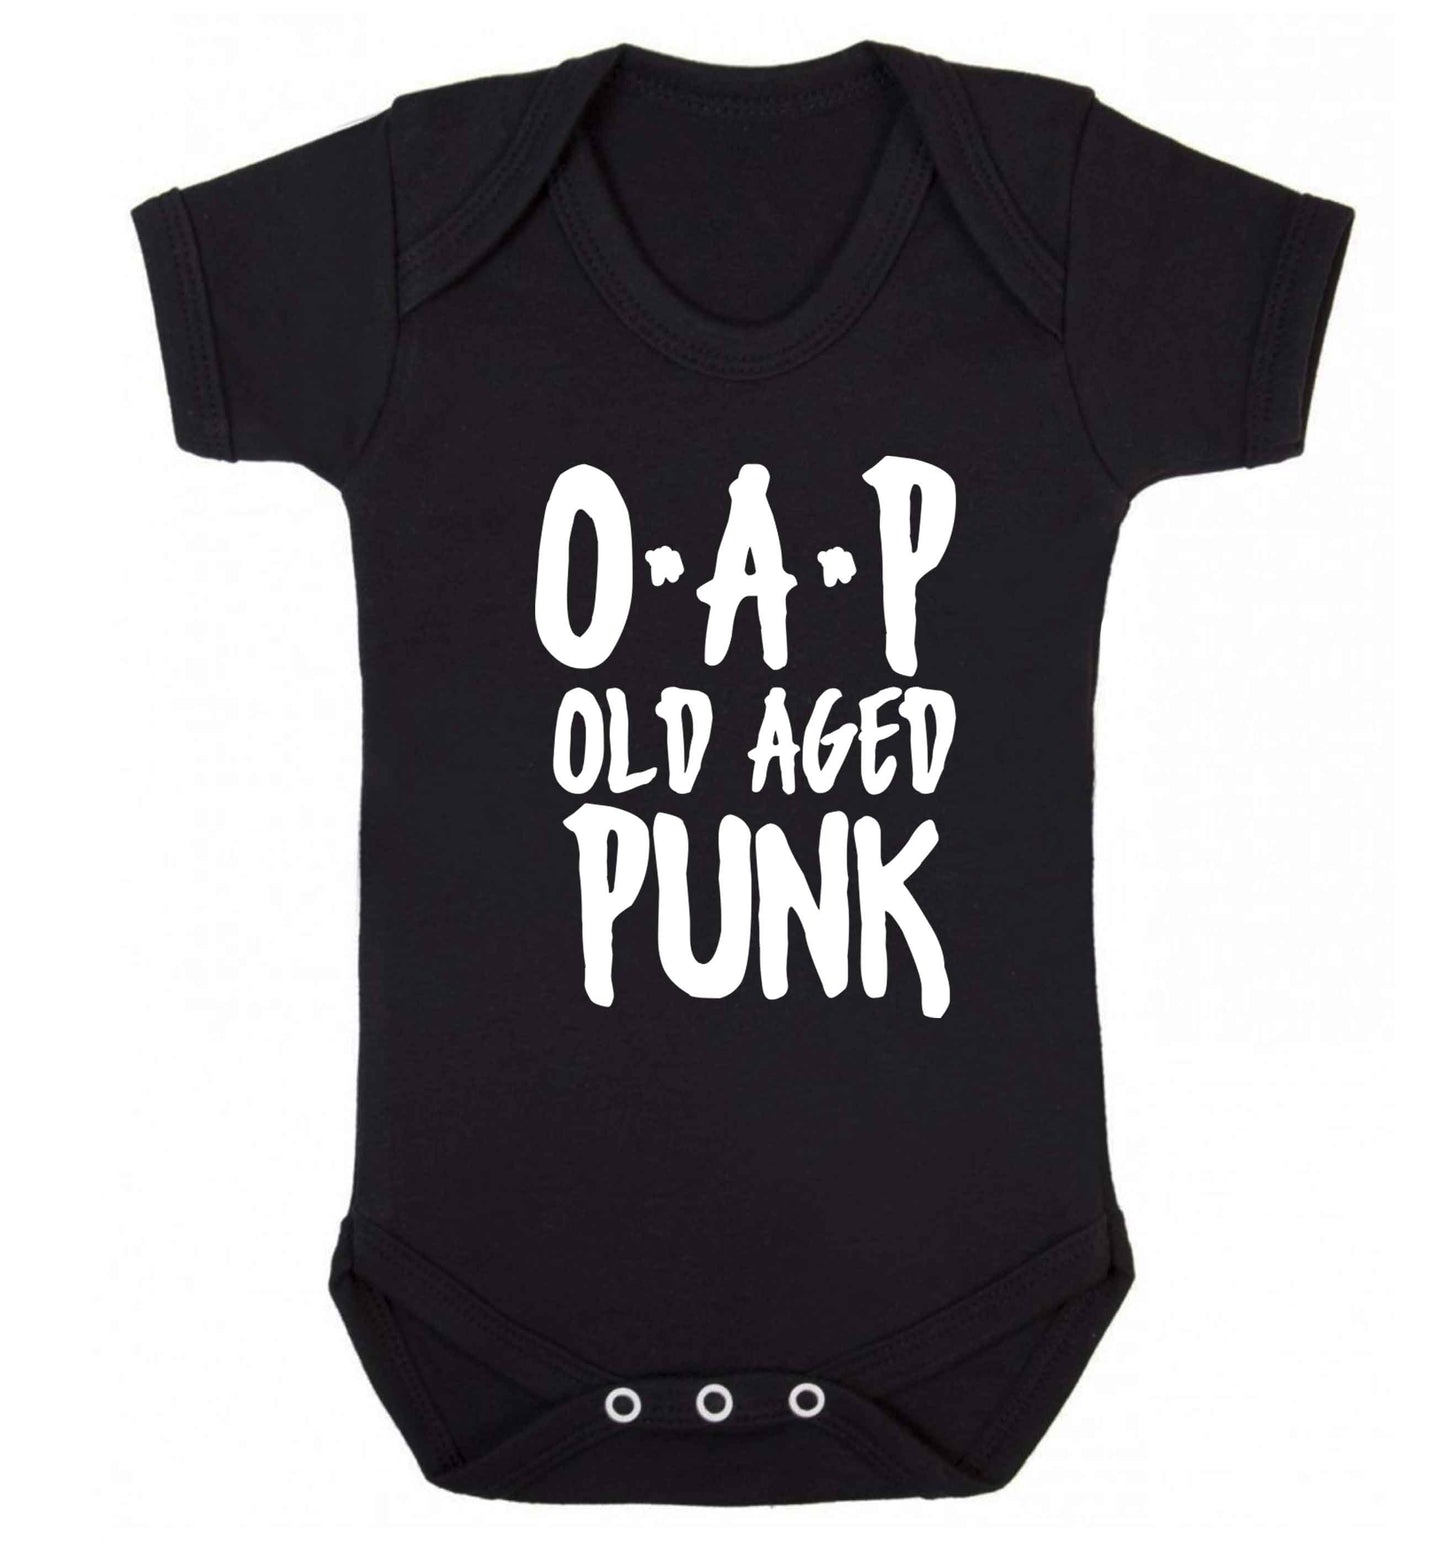 O.A.P Old Age Punk Baby Vest black 18-24 months